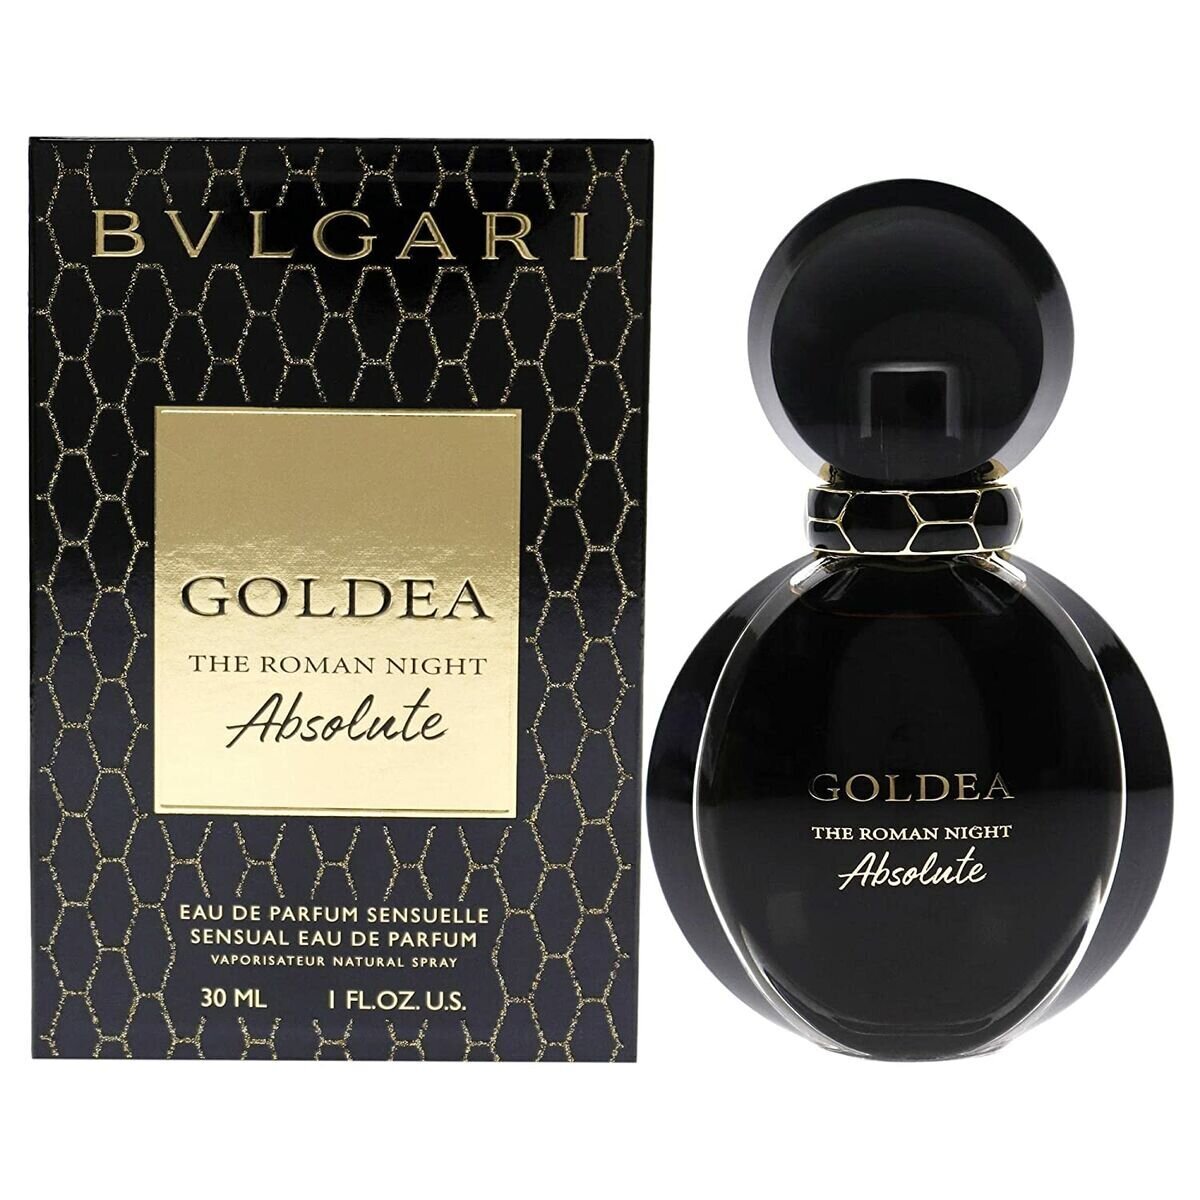 Bvlgari Goldea The Roman Night Absolute Eau De Parfum 30 ml